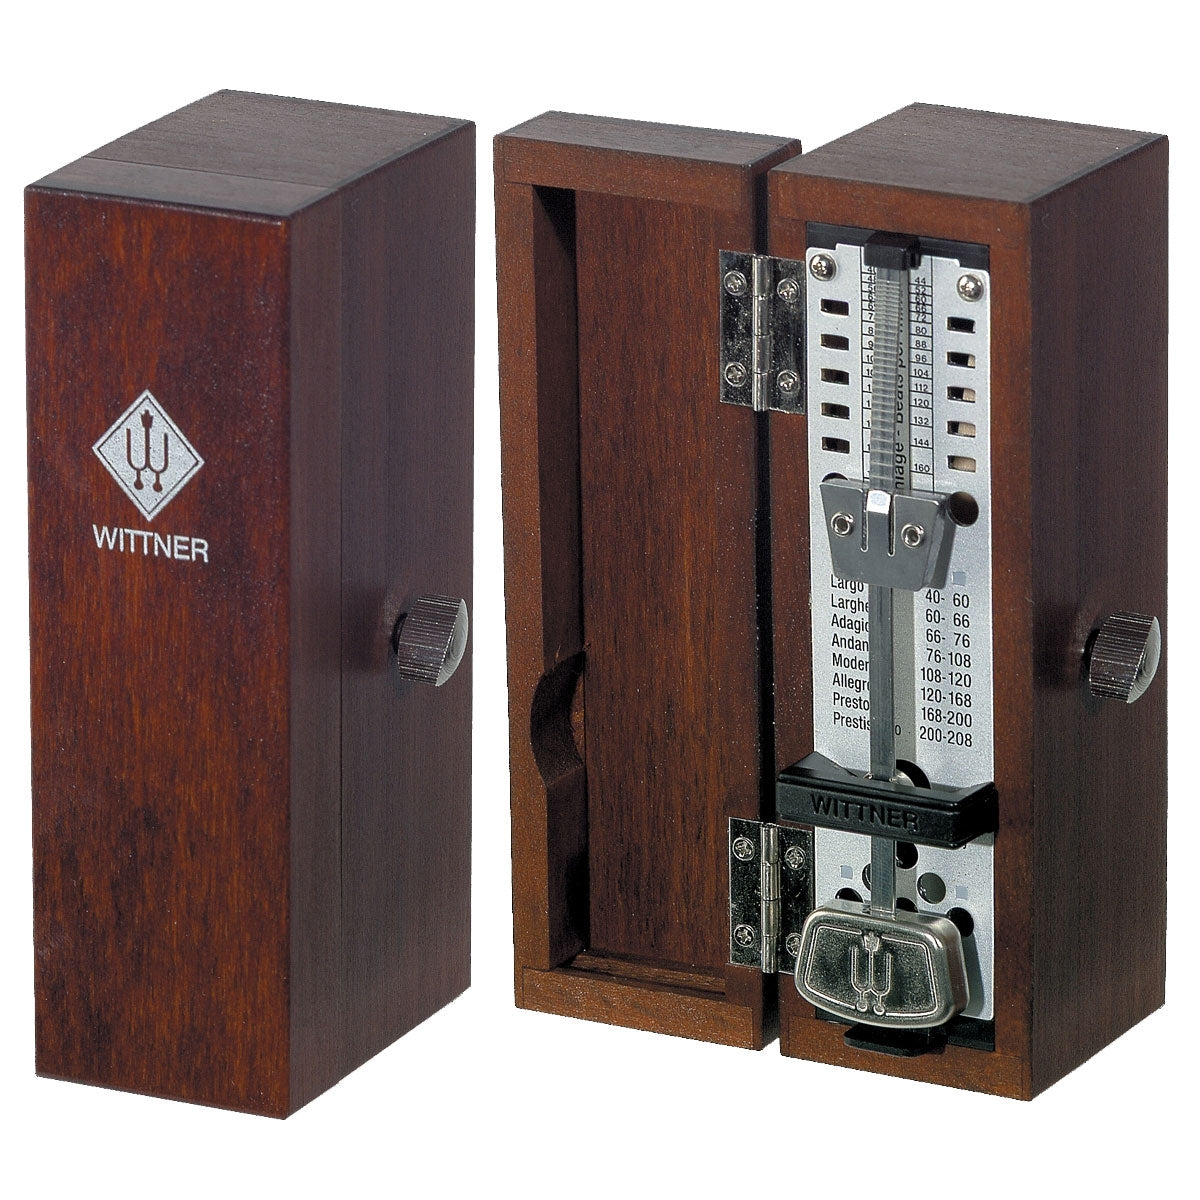 Wittner Taktell Super MIni Solid Wood Metronome - Mahogany